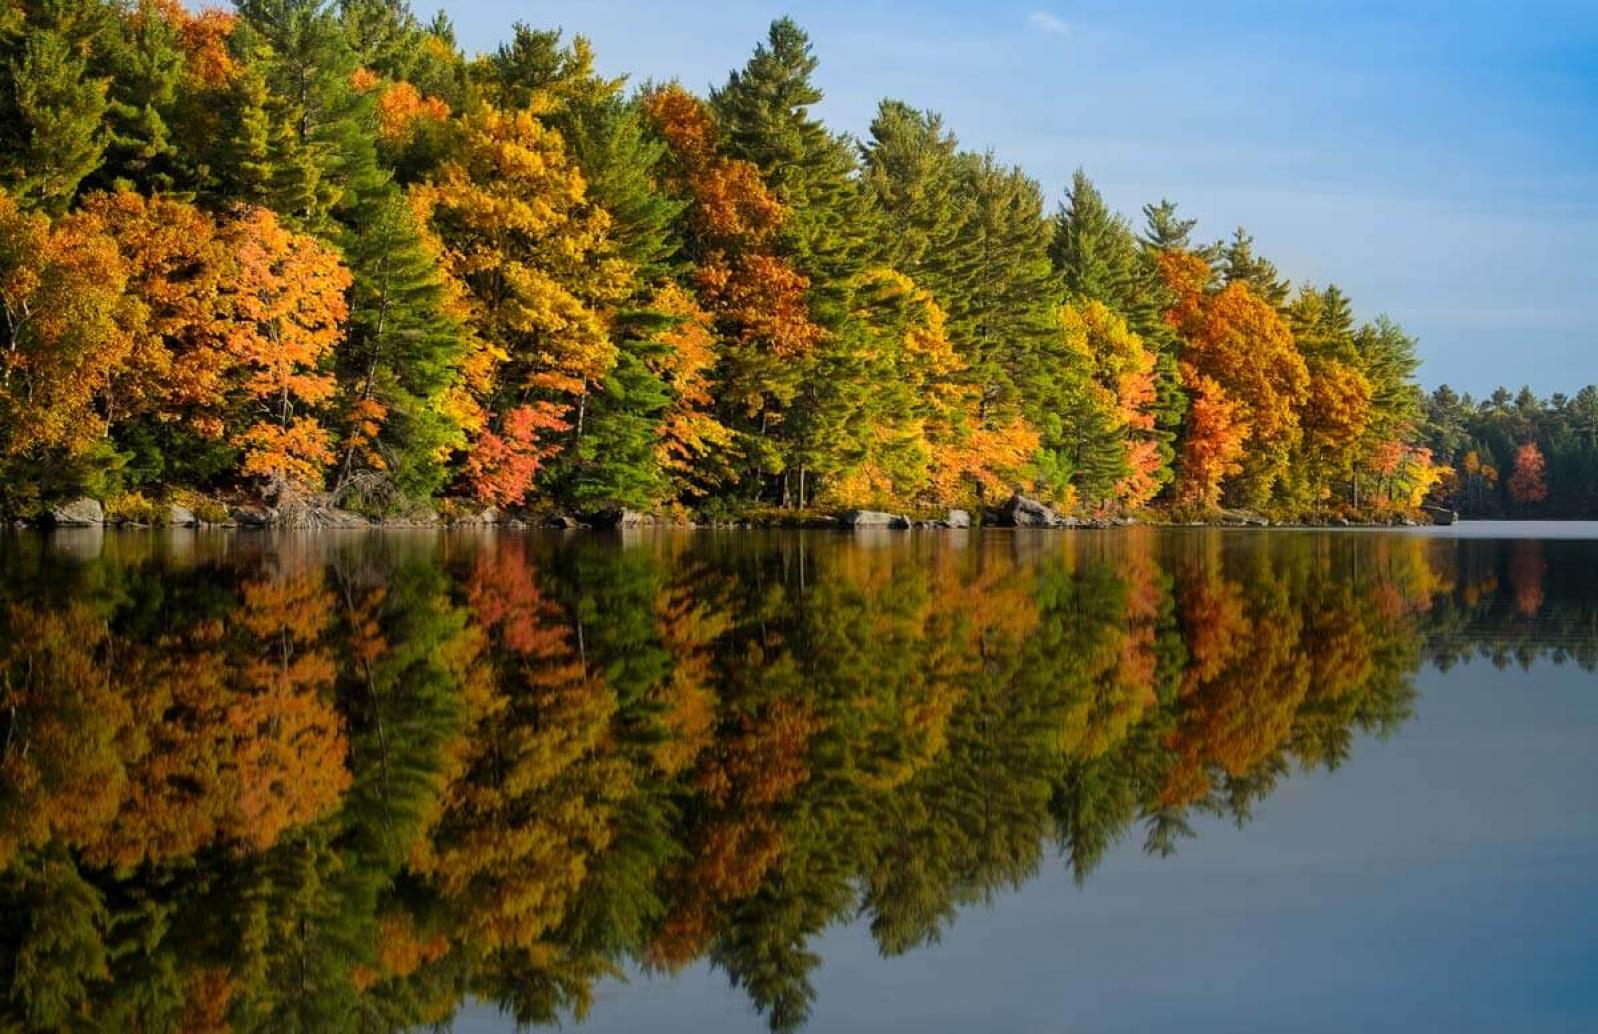 Fall leaves over a lake